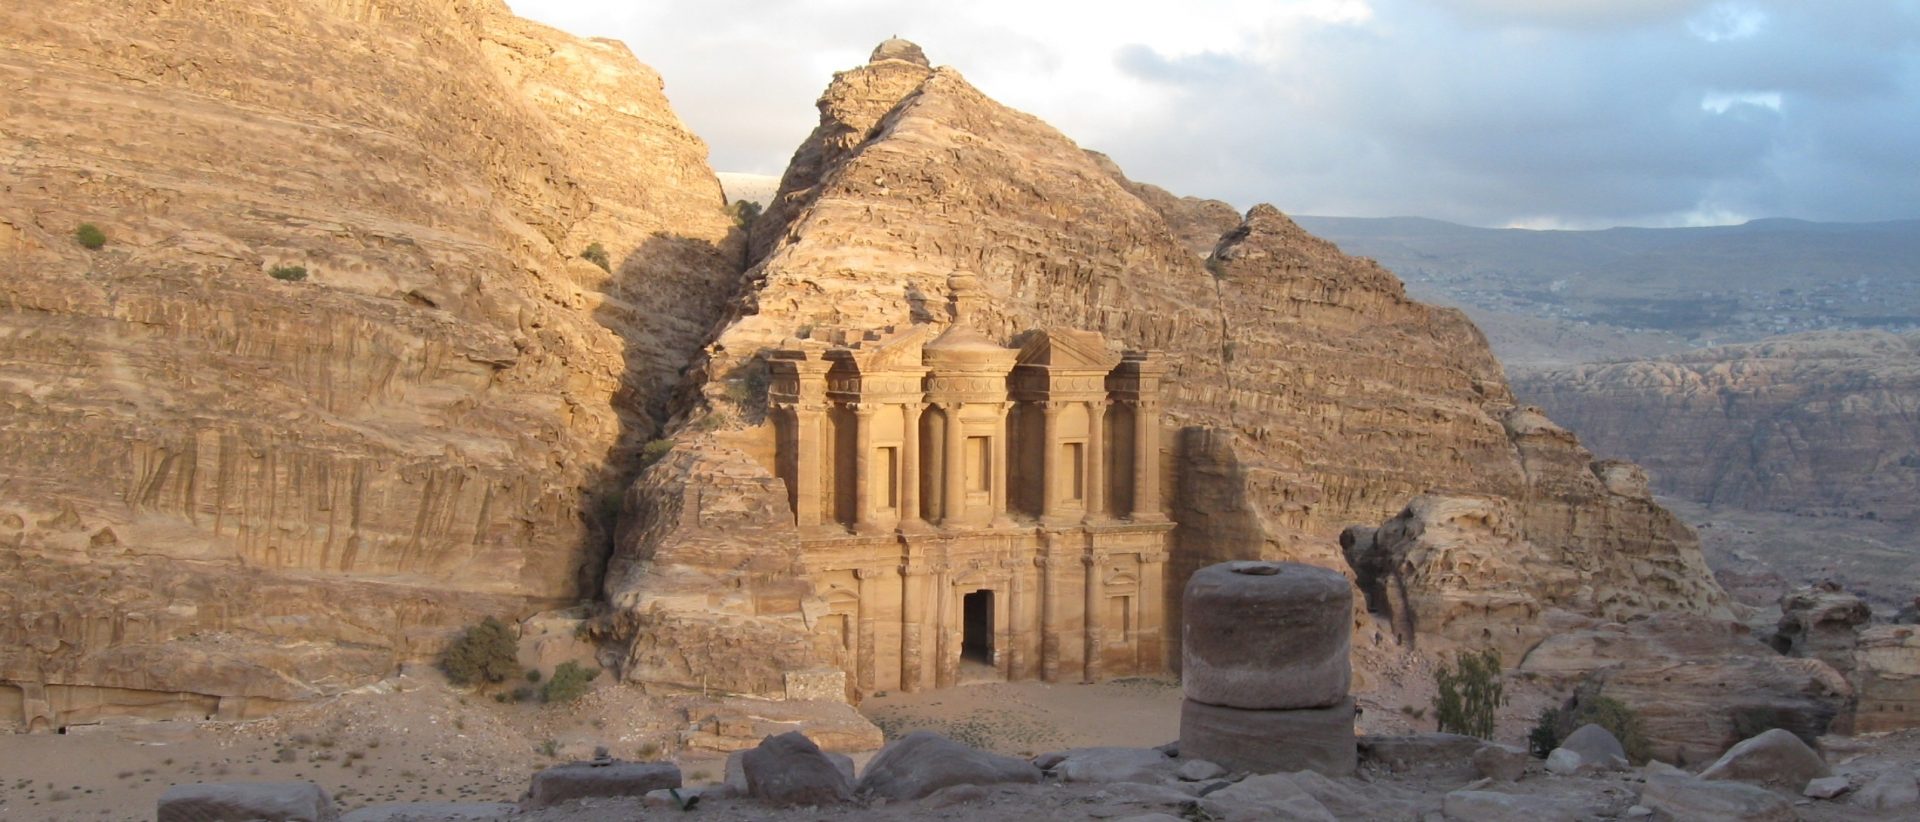 Petra, Jordan trips from Cyprus